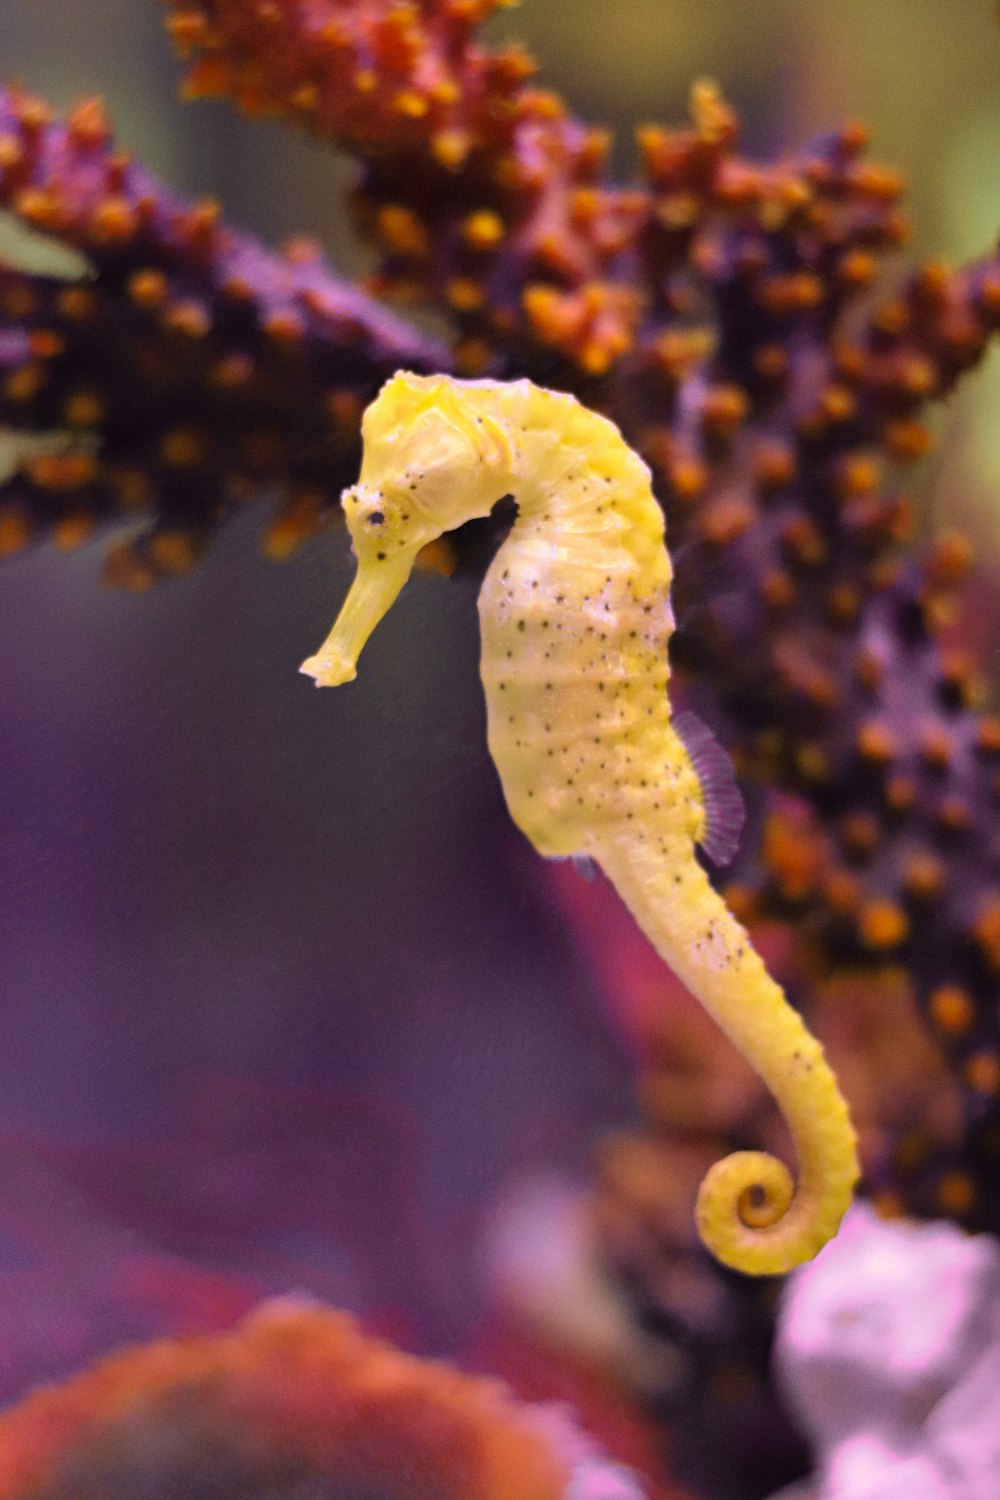 a yellow sea creature